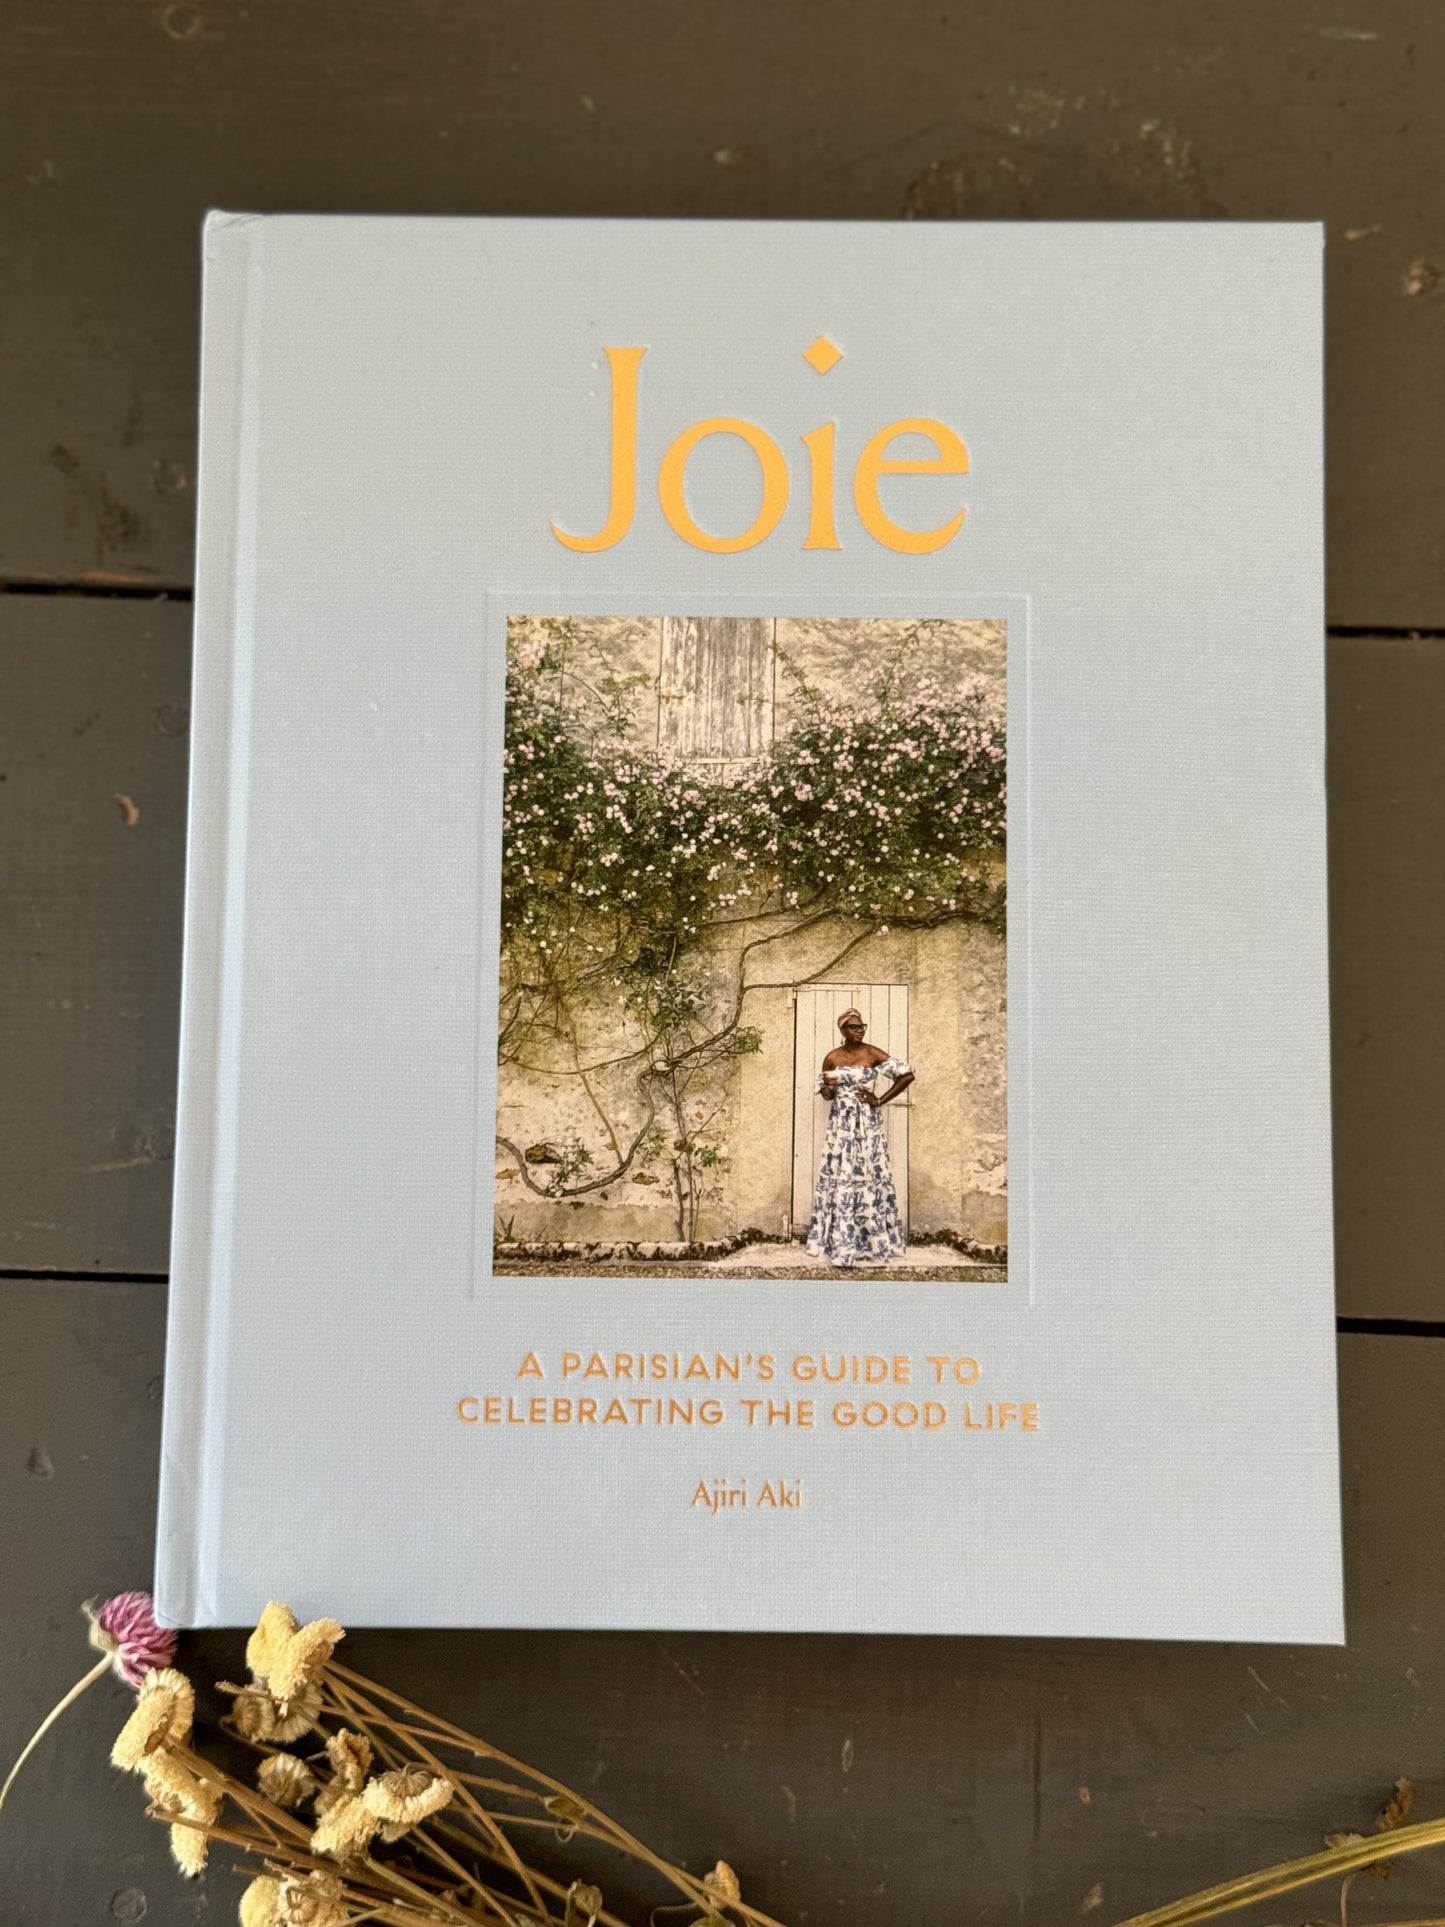 "Joie" Book